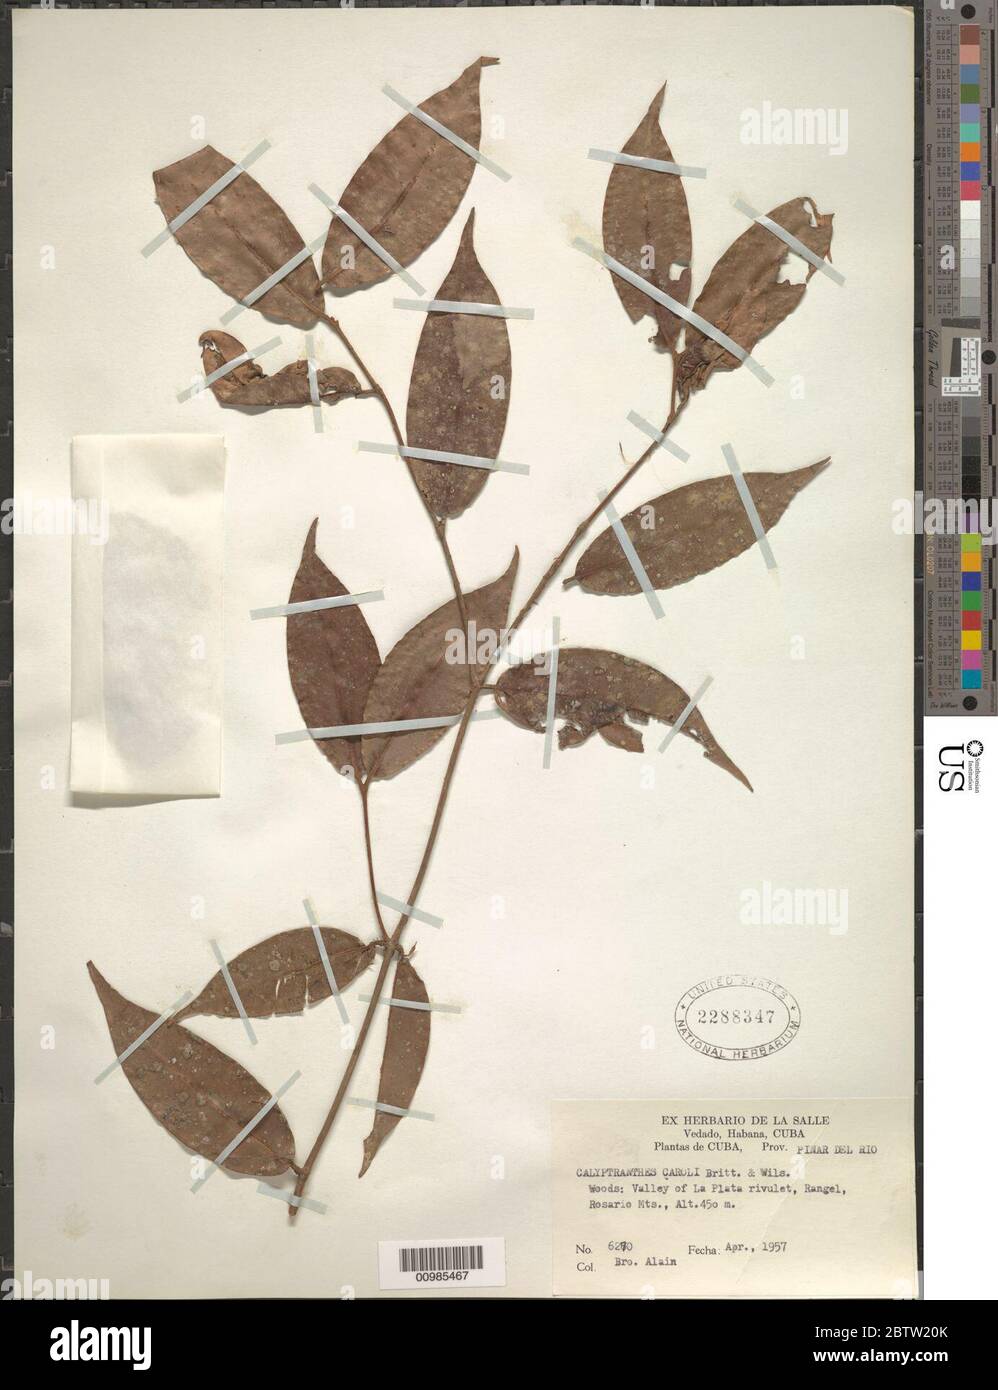 Calyptranthes caroli. Stock Photo